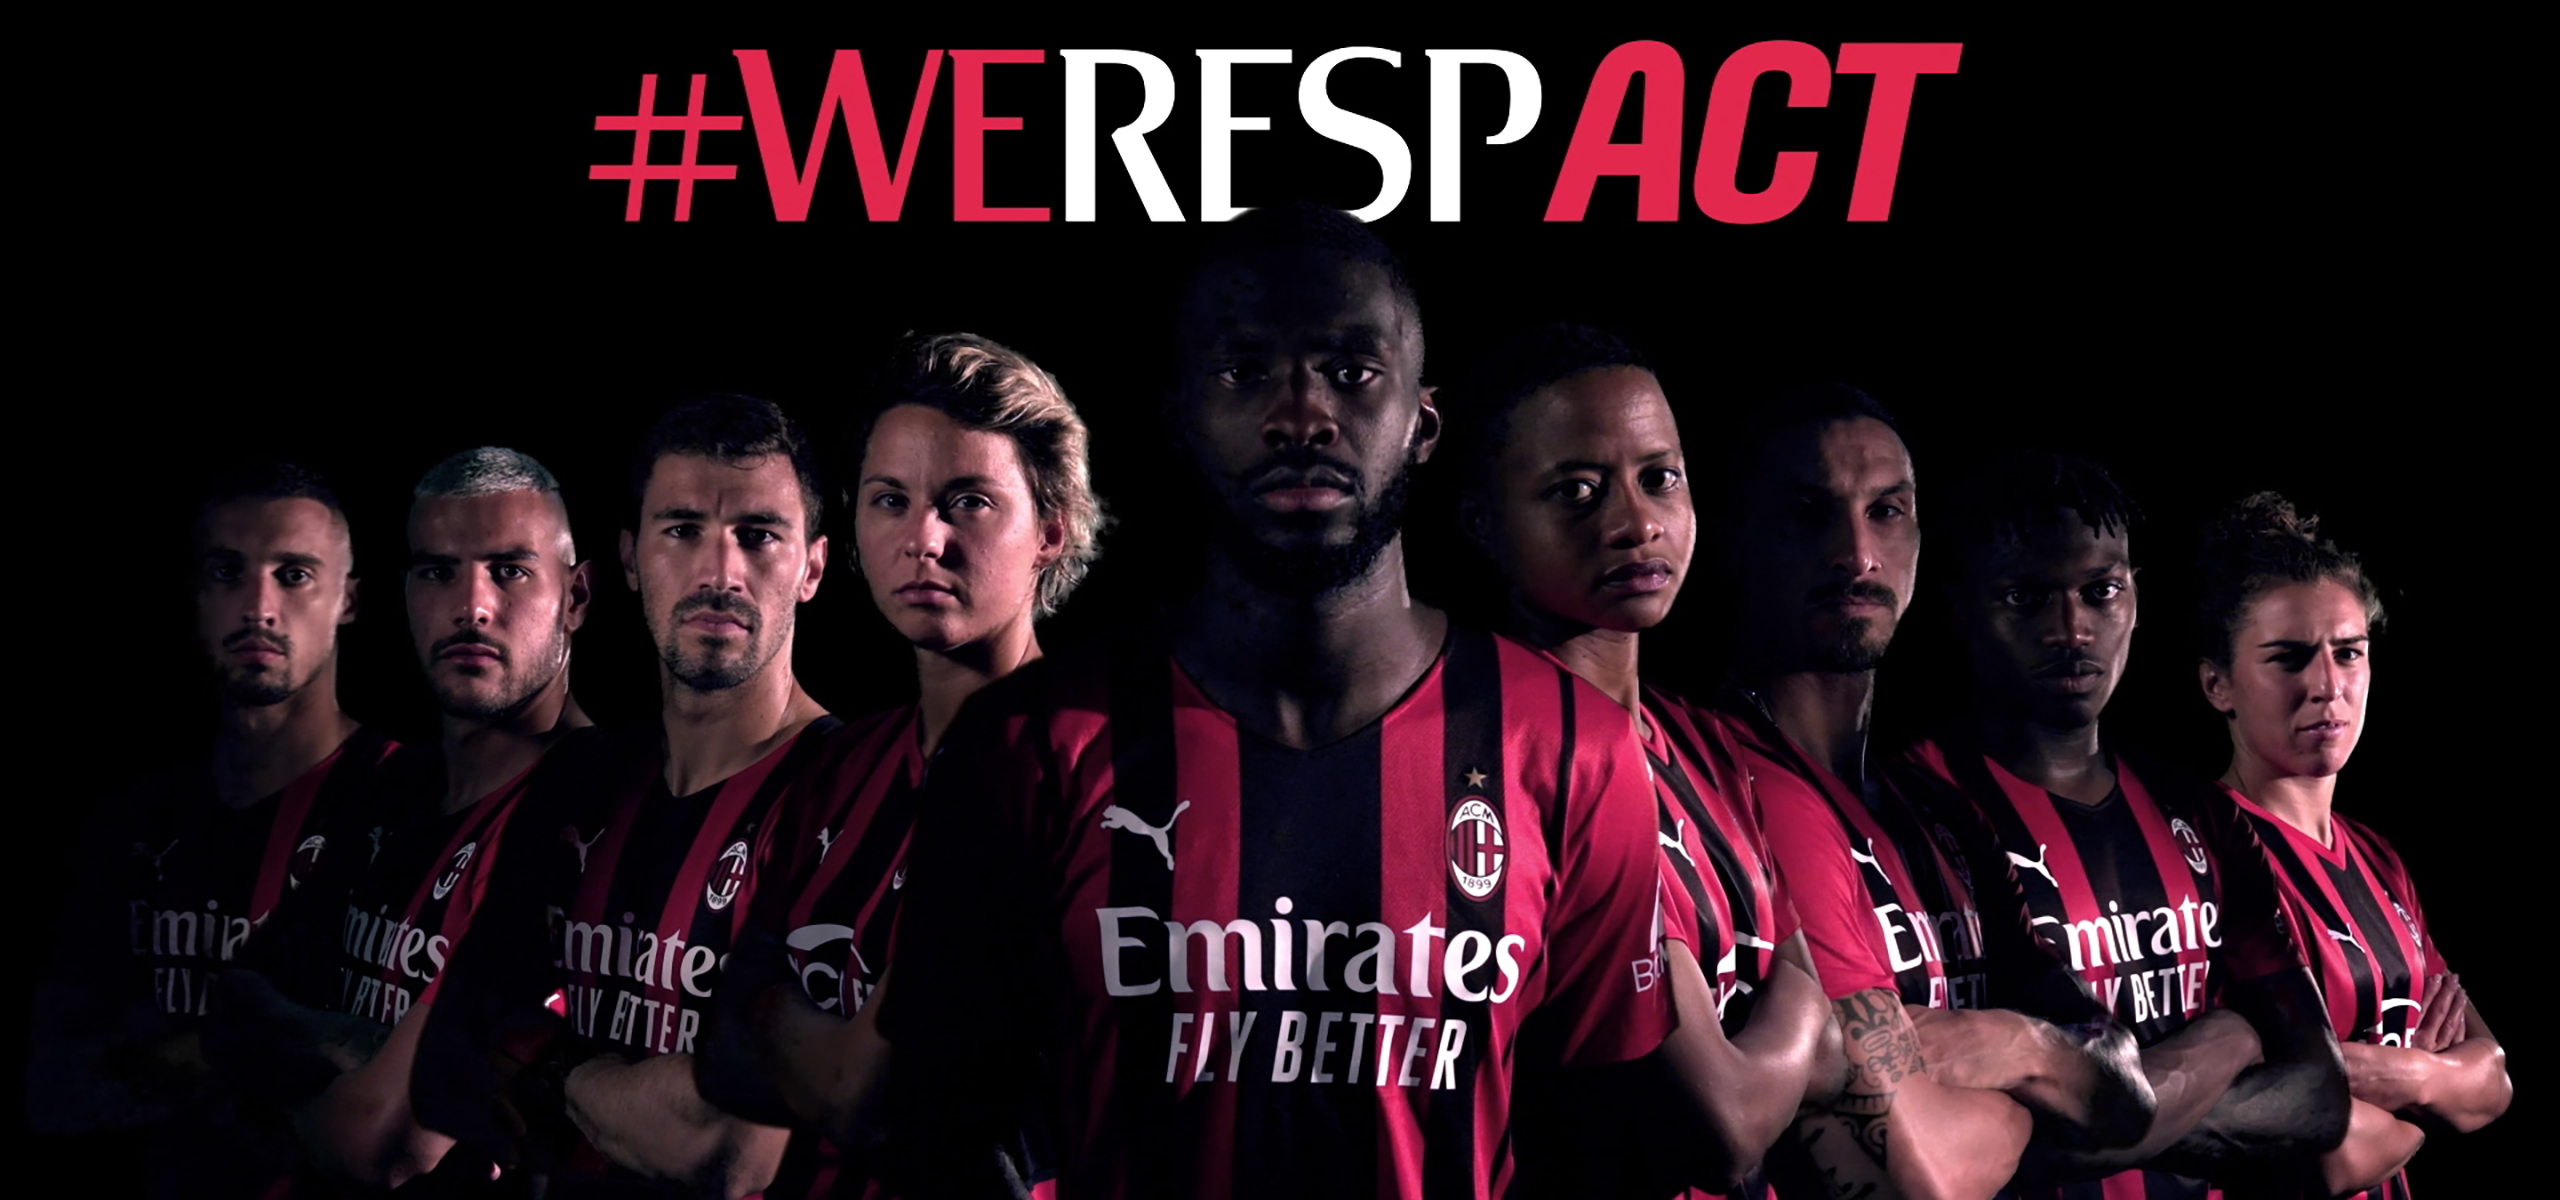 forbinde Reception græsplæne A message of RespAct | AC Milan